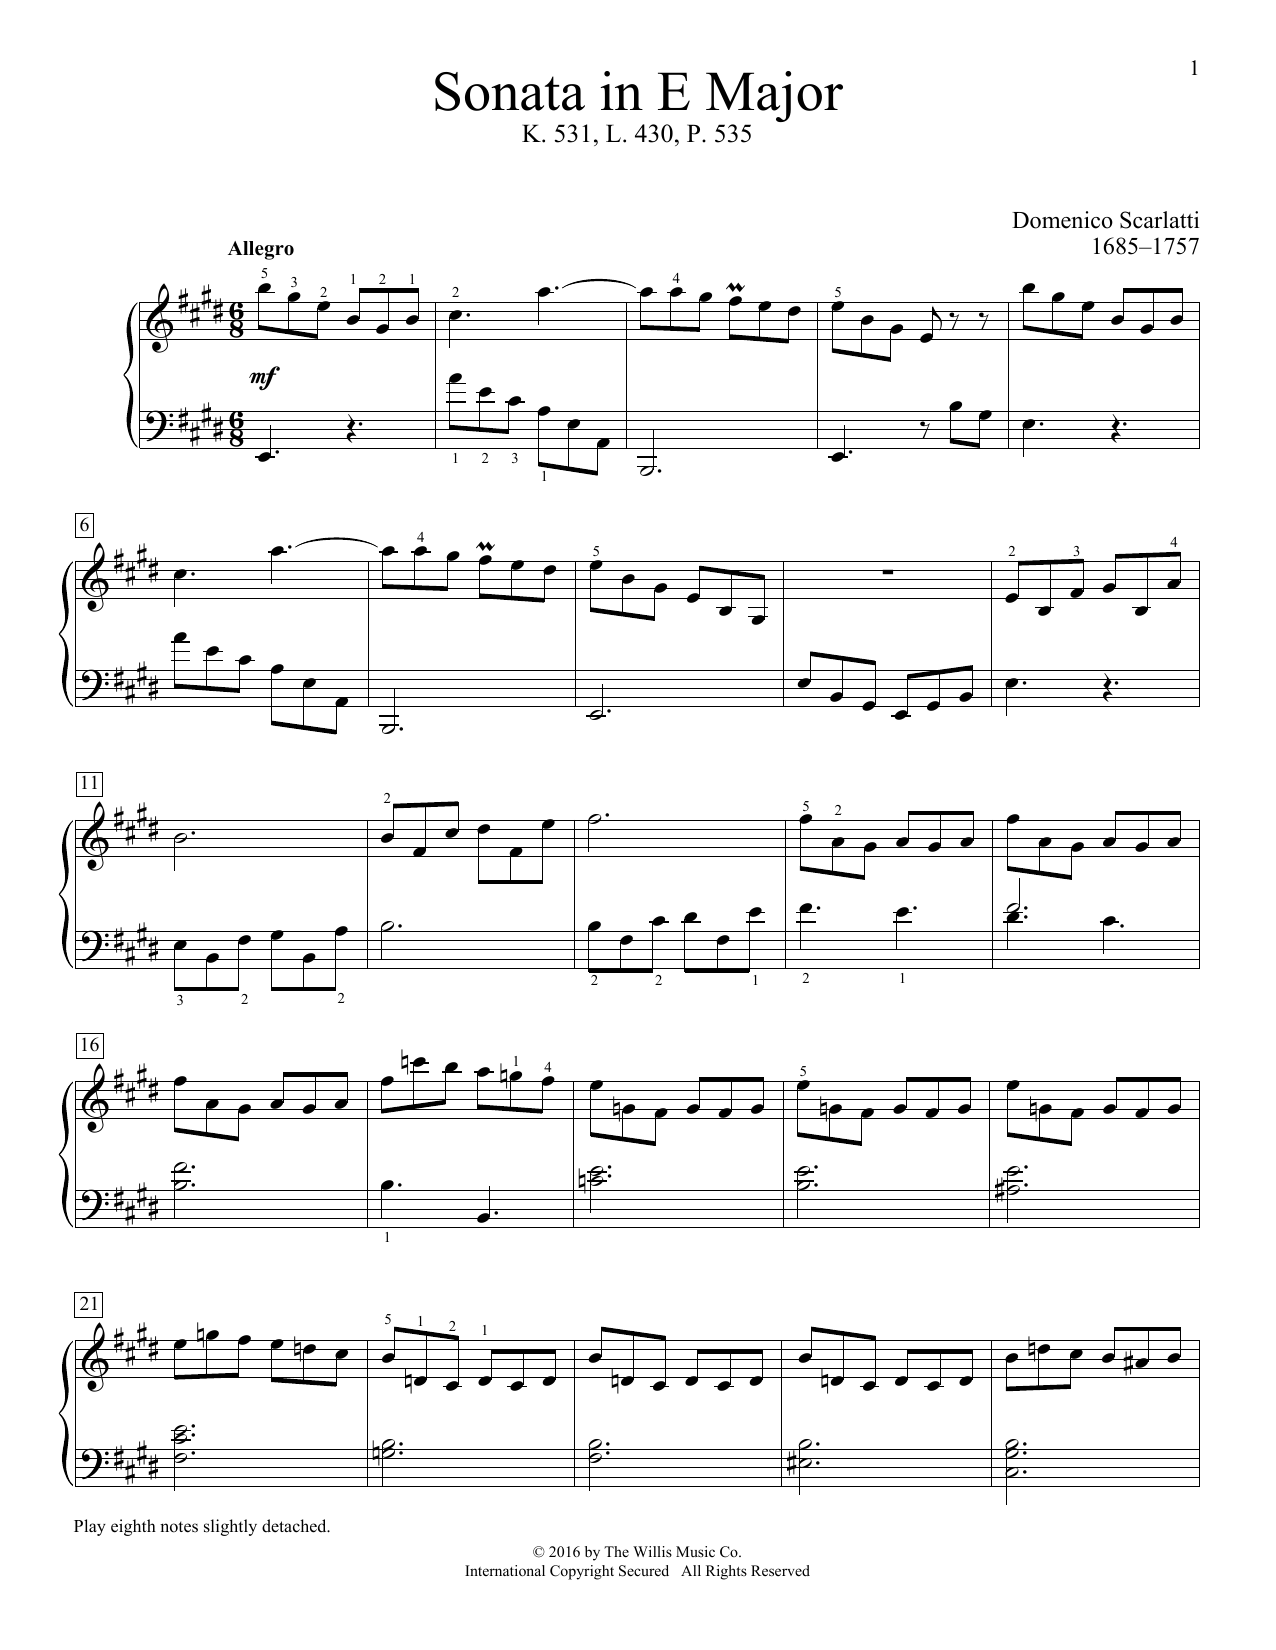 Domenico Scarlatti Sonata In E Major, K. 531, L. 430, P. 535 sheet music notes and chords arranged for Educational Piano